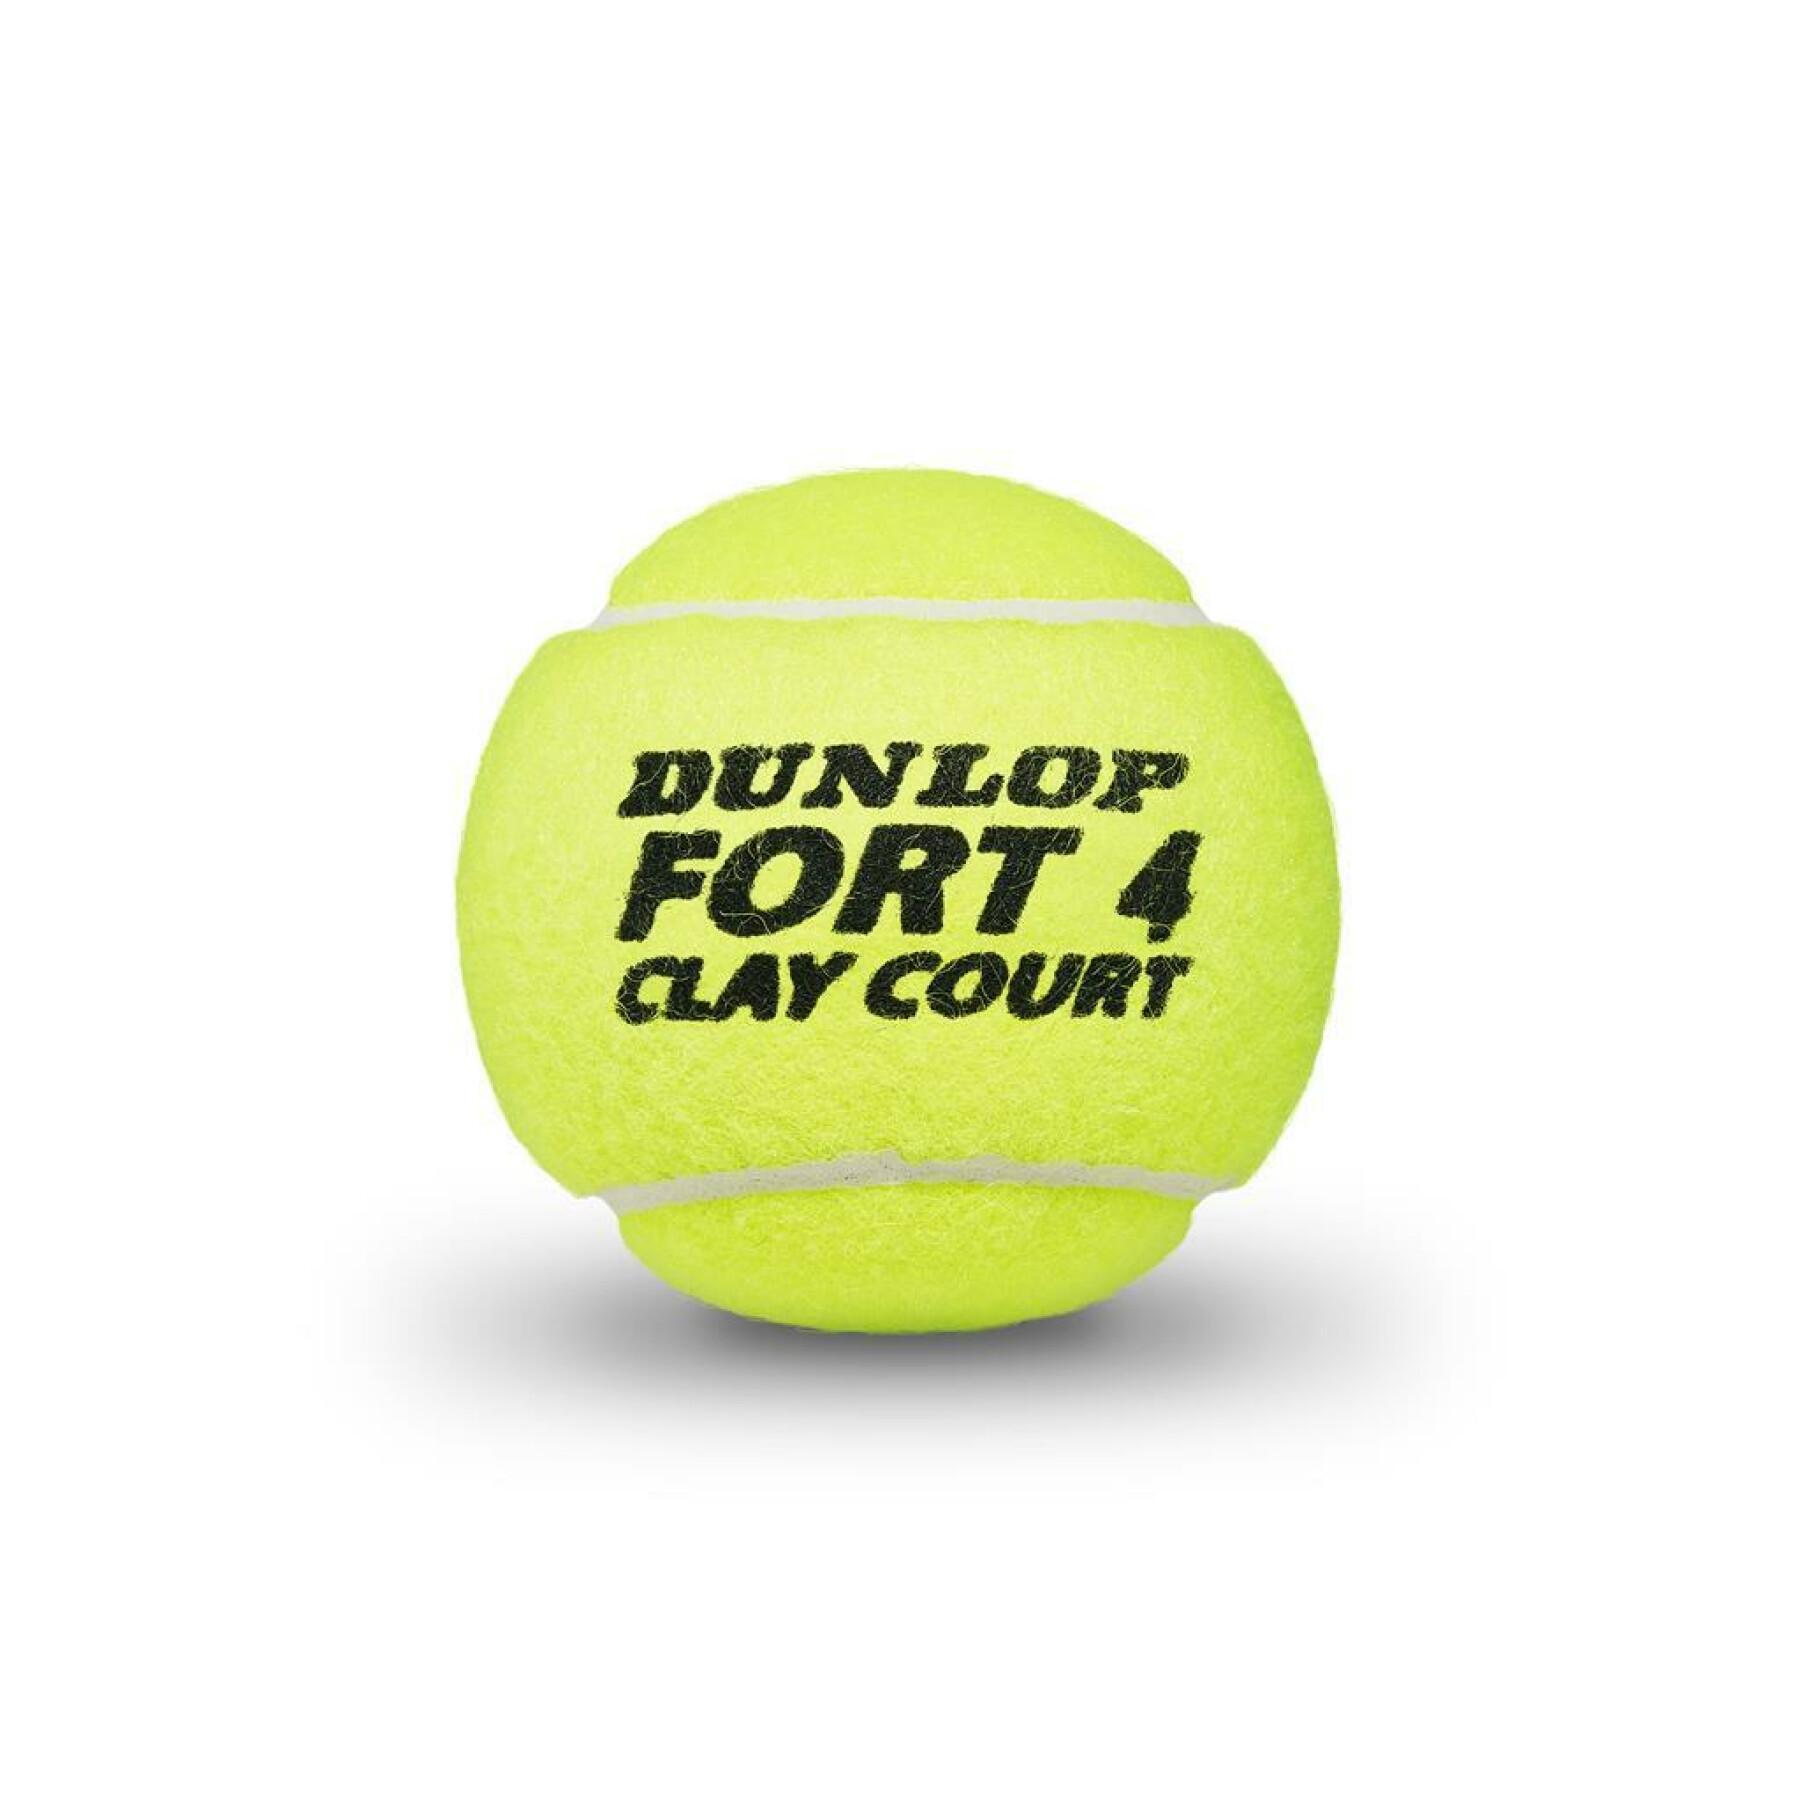 Set di 4 palle da tennis Dunlop fort clay court 4tin